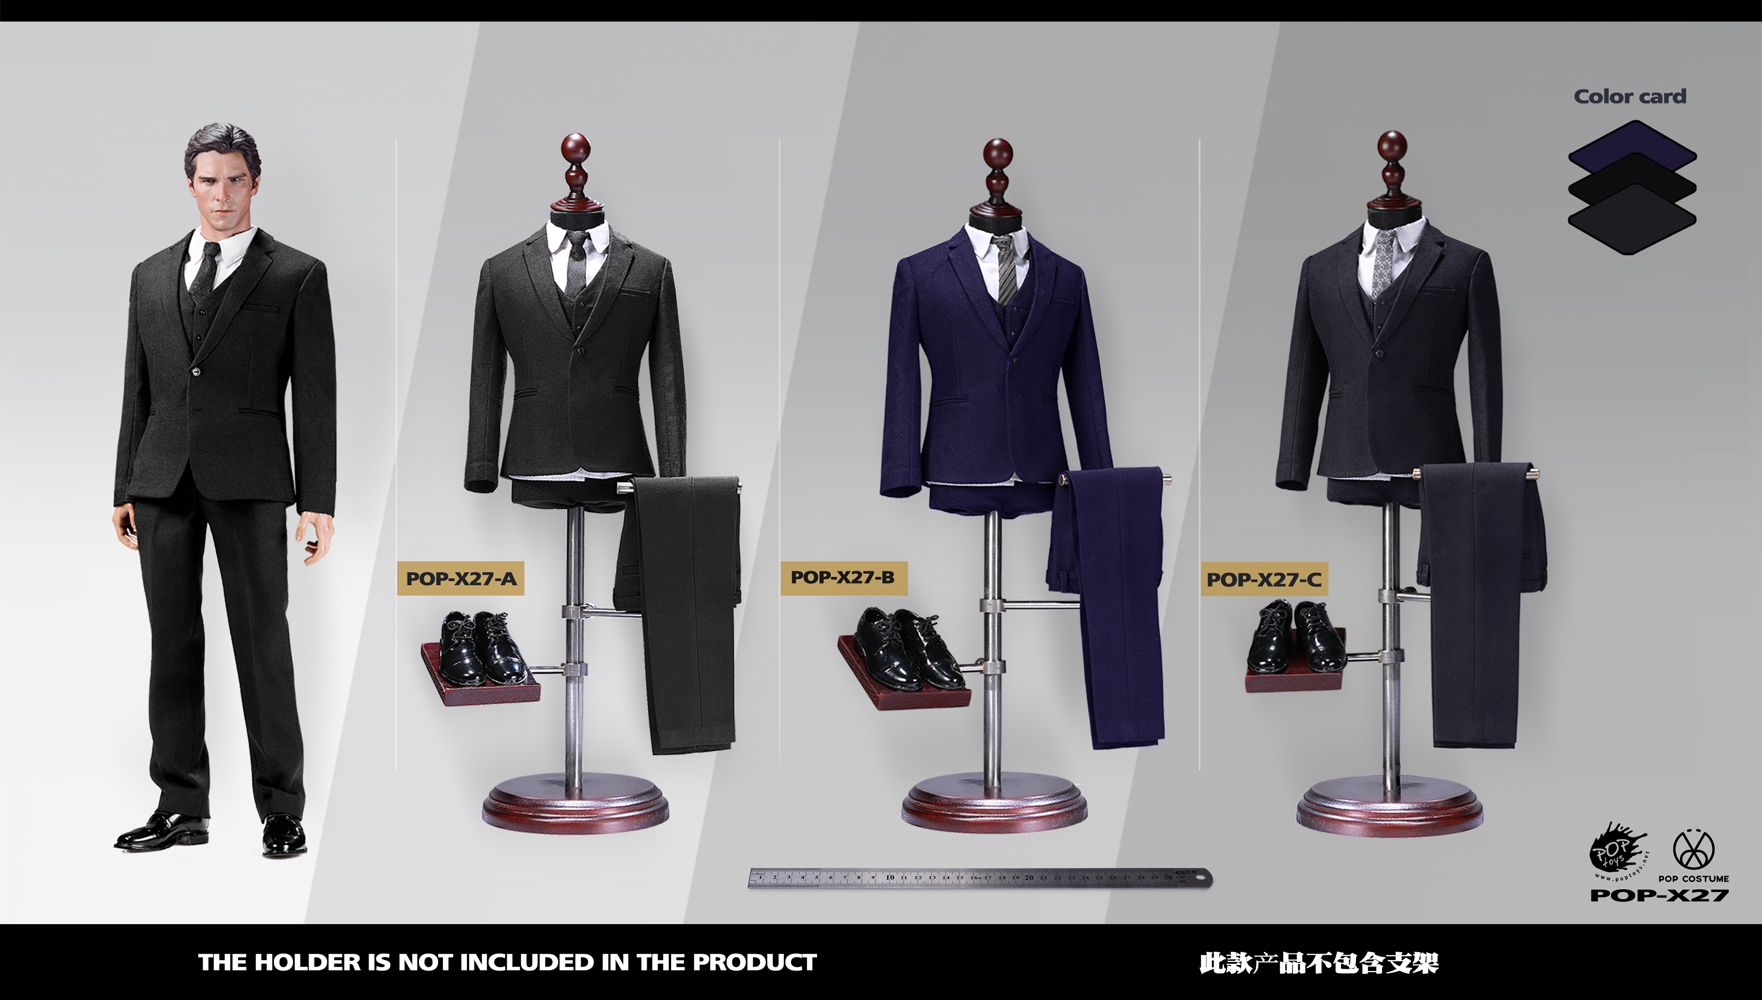 POPTOYS 1 / 6 Advanced customized men's suit set X27 monochrome